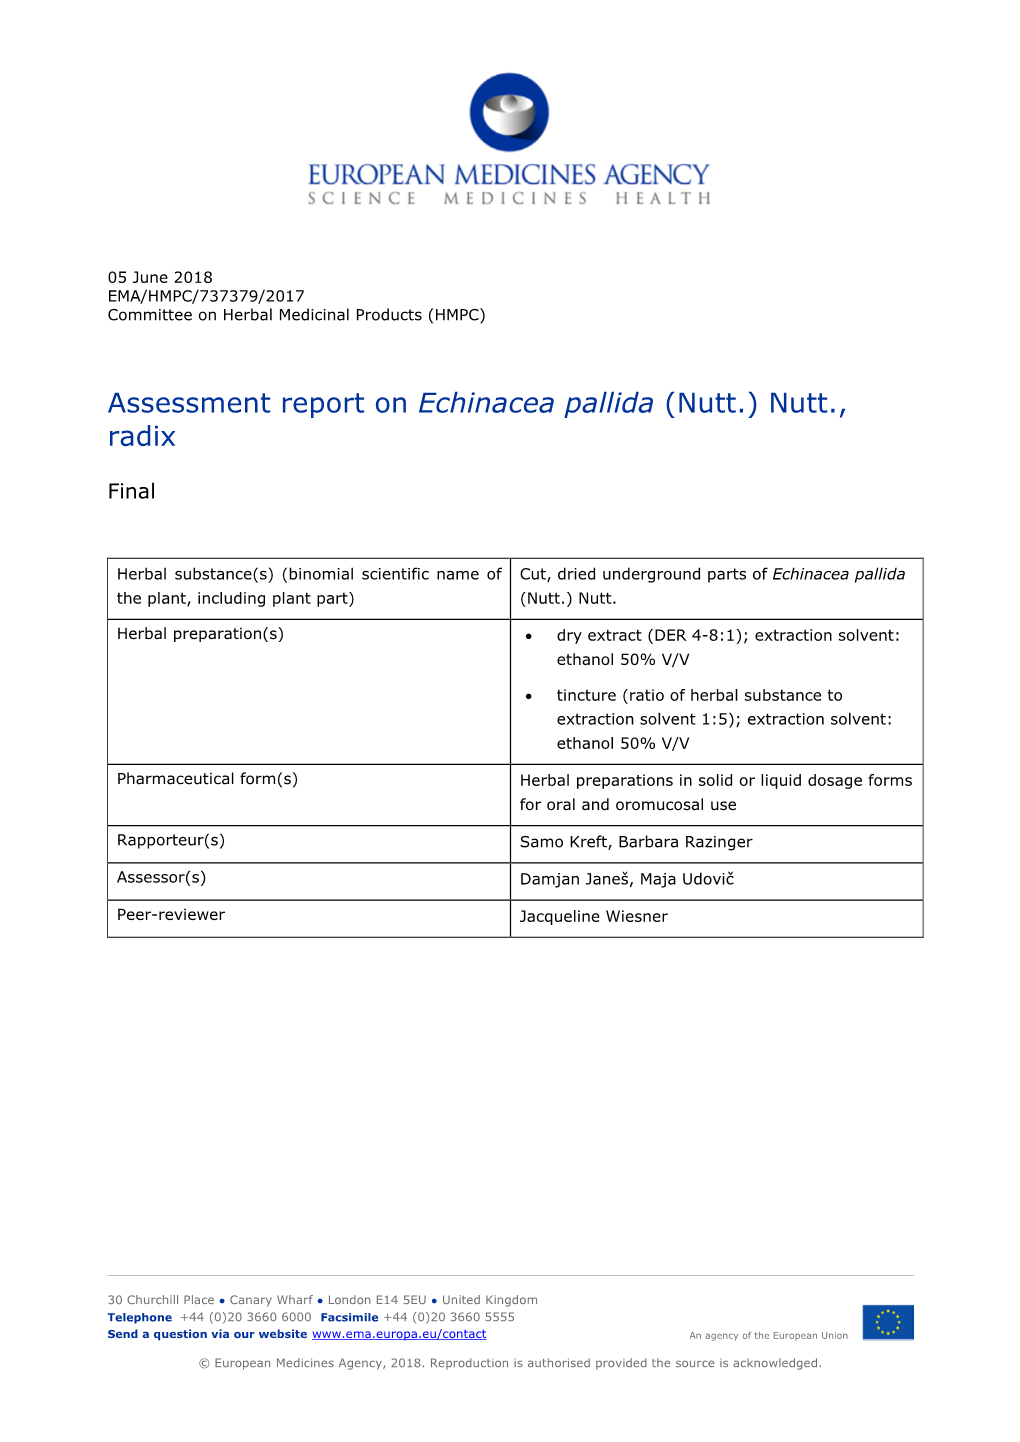 Assessment Report on Echinacea Pallida (Nutt.) Nutt., Radix